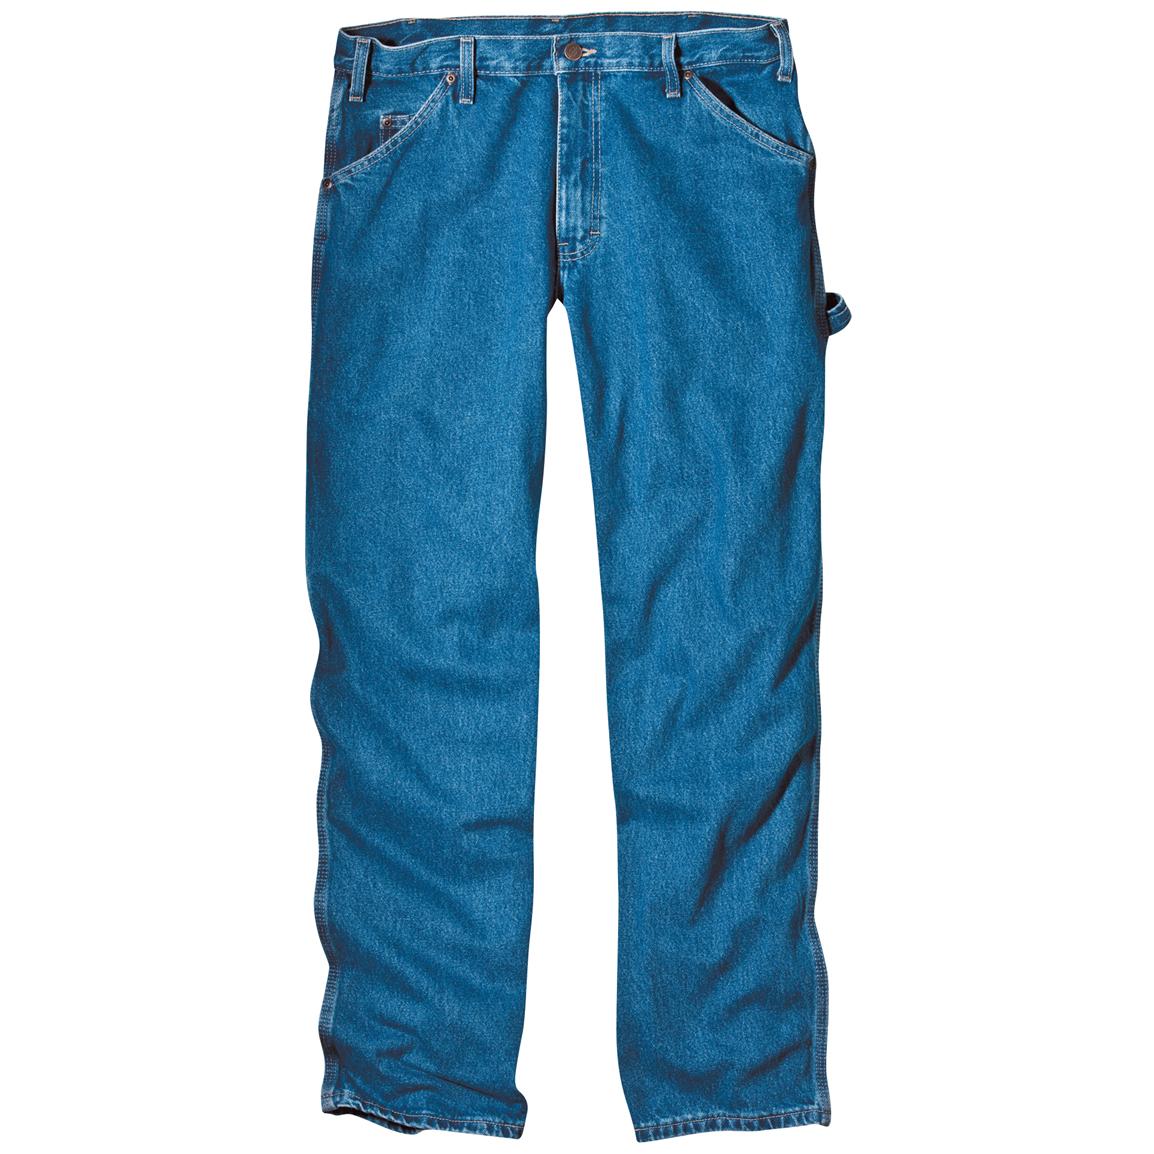 Clothing Clip art. jeans clipart